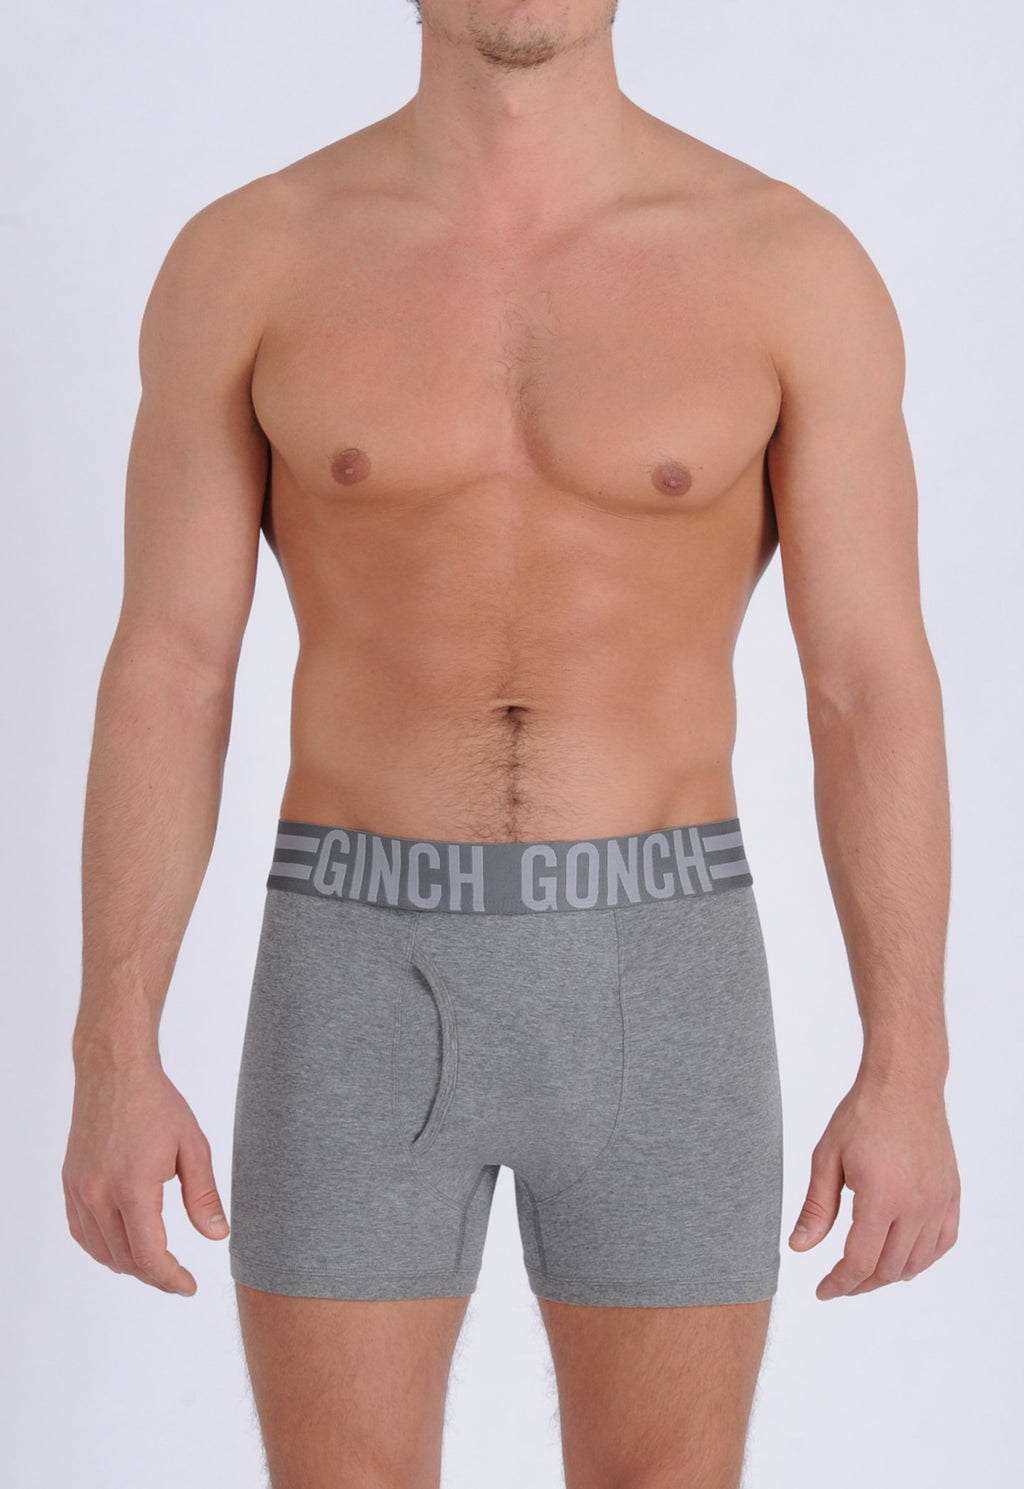 Ginch Gonch Signature Series - Boxer Brief - Grey Men's underwear boxer brief trunk printed waistband front